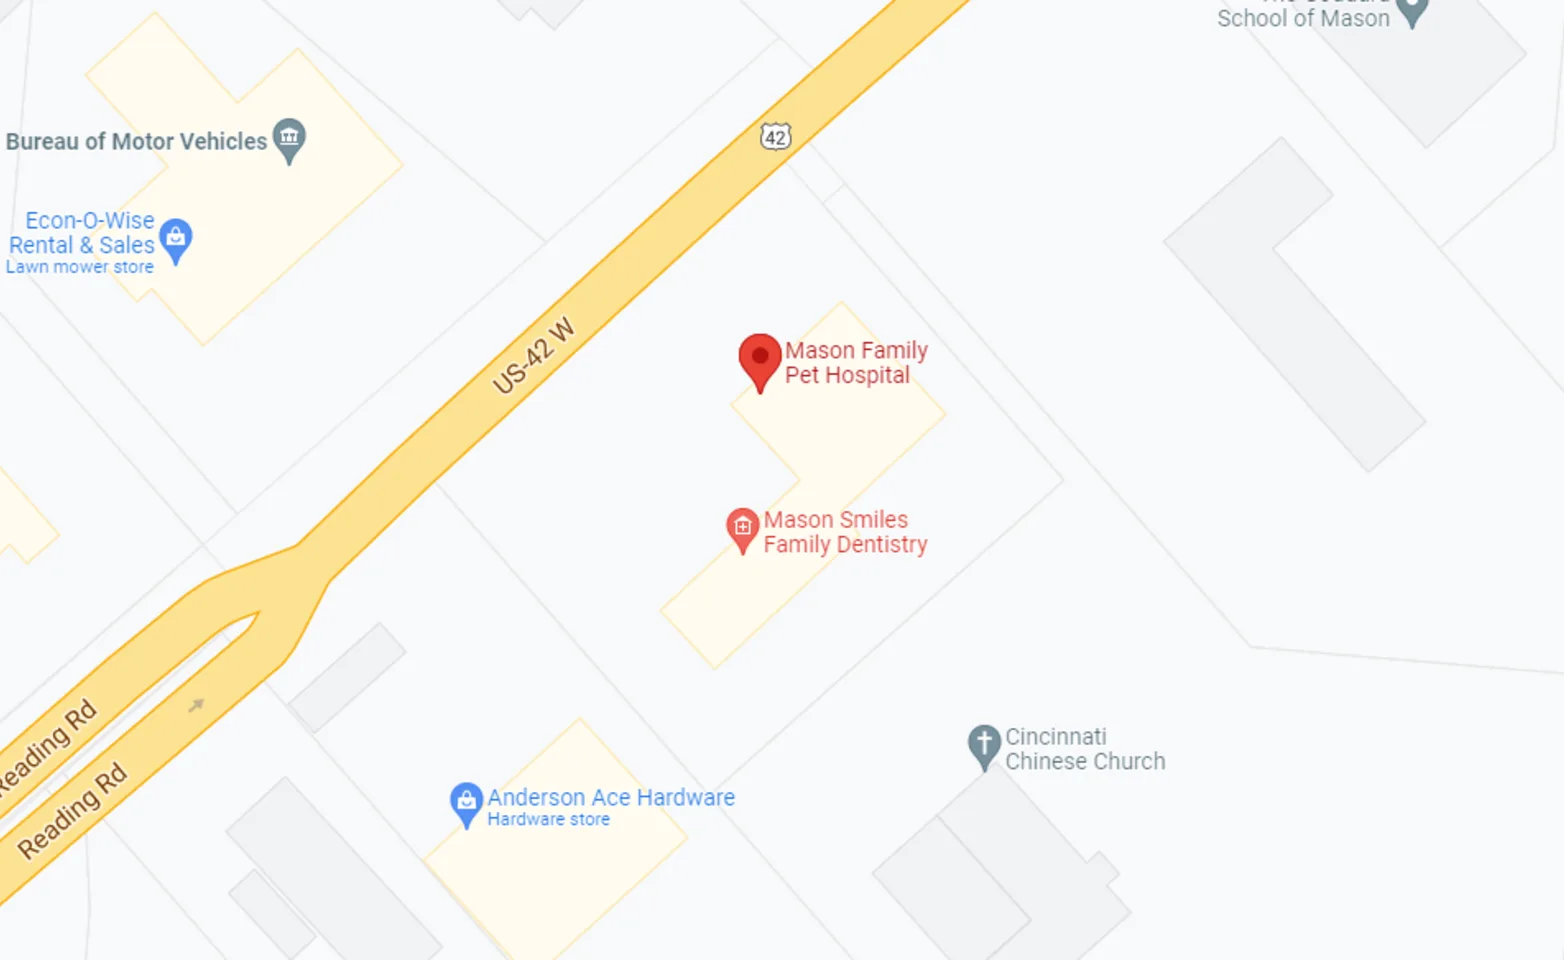 Mason Family Pet Hospital via Google Maps